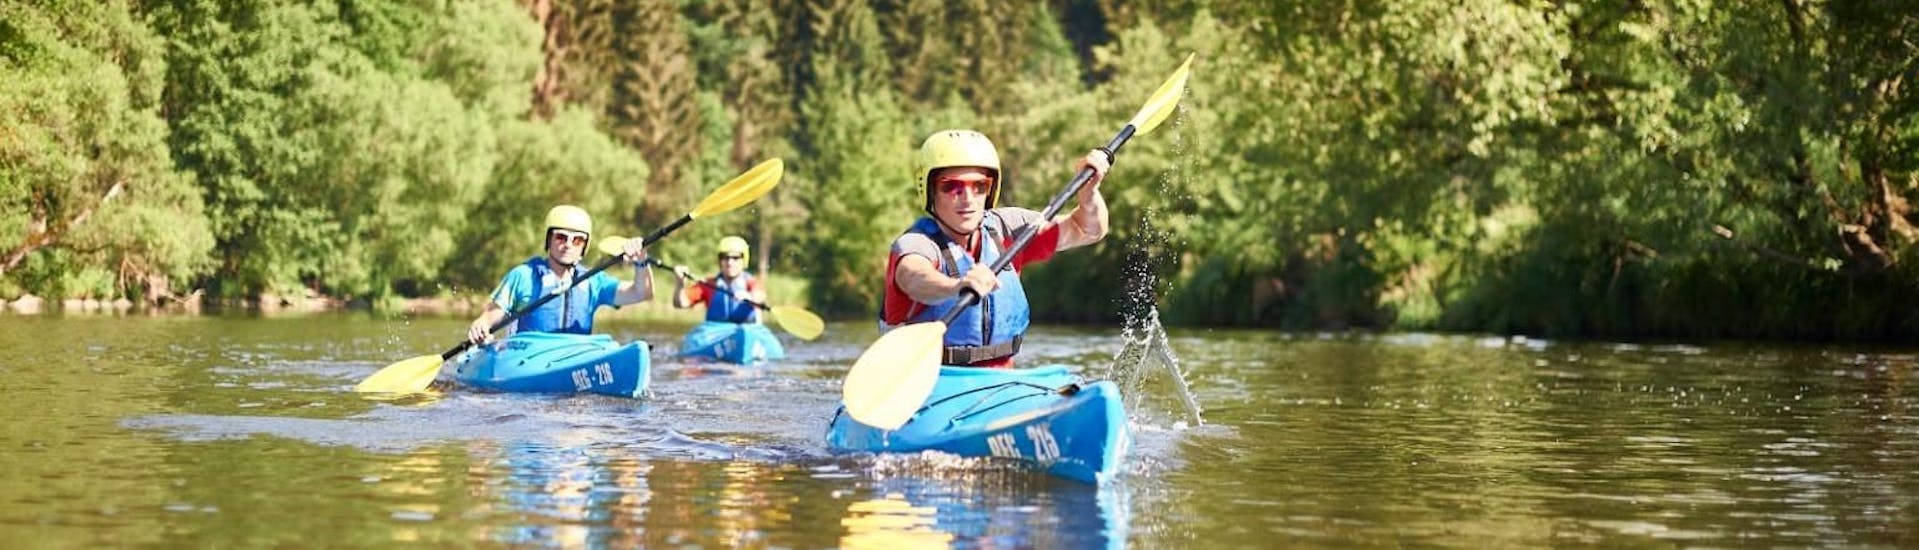 Three participants in their kayaks enjoying their kayak tour with Schneider Events Bavaria.